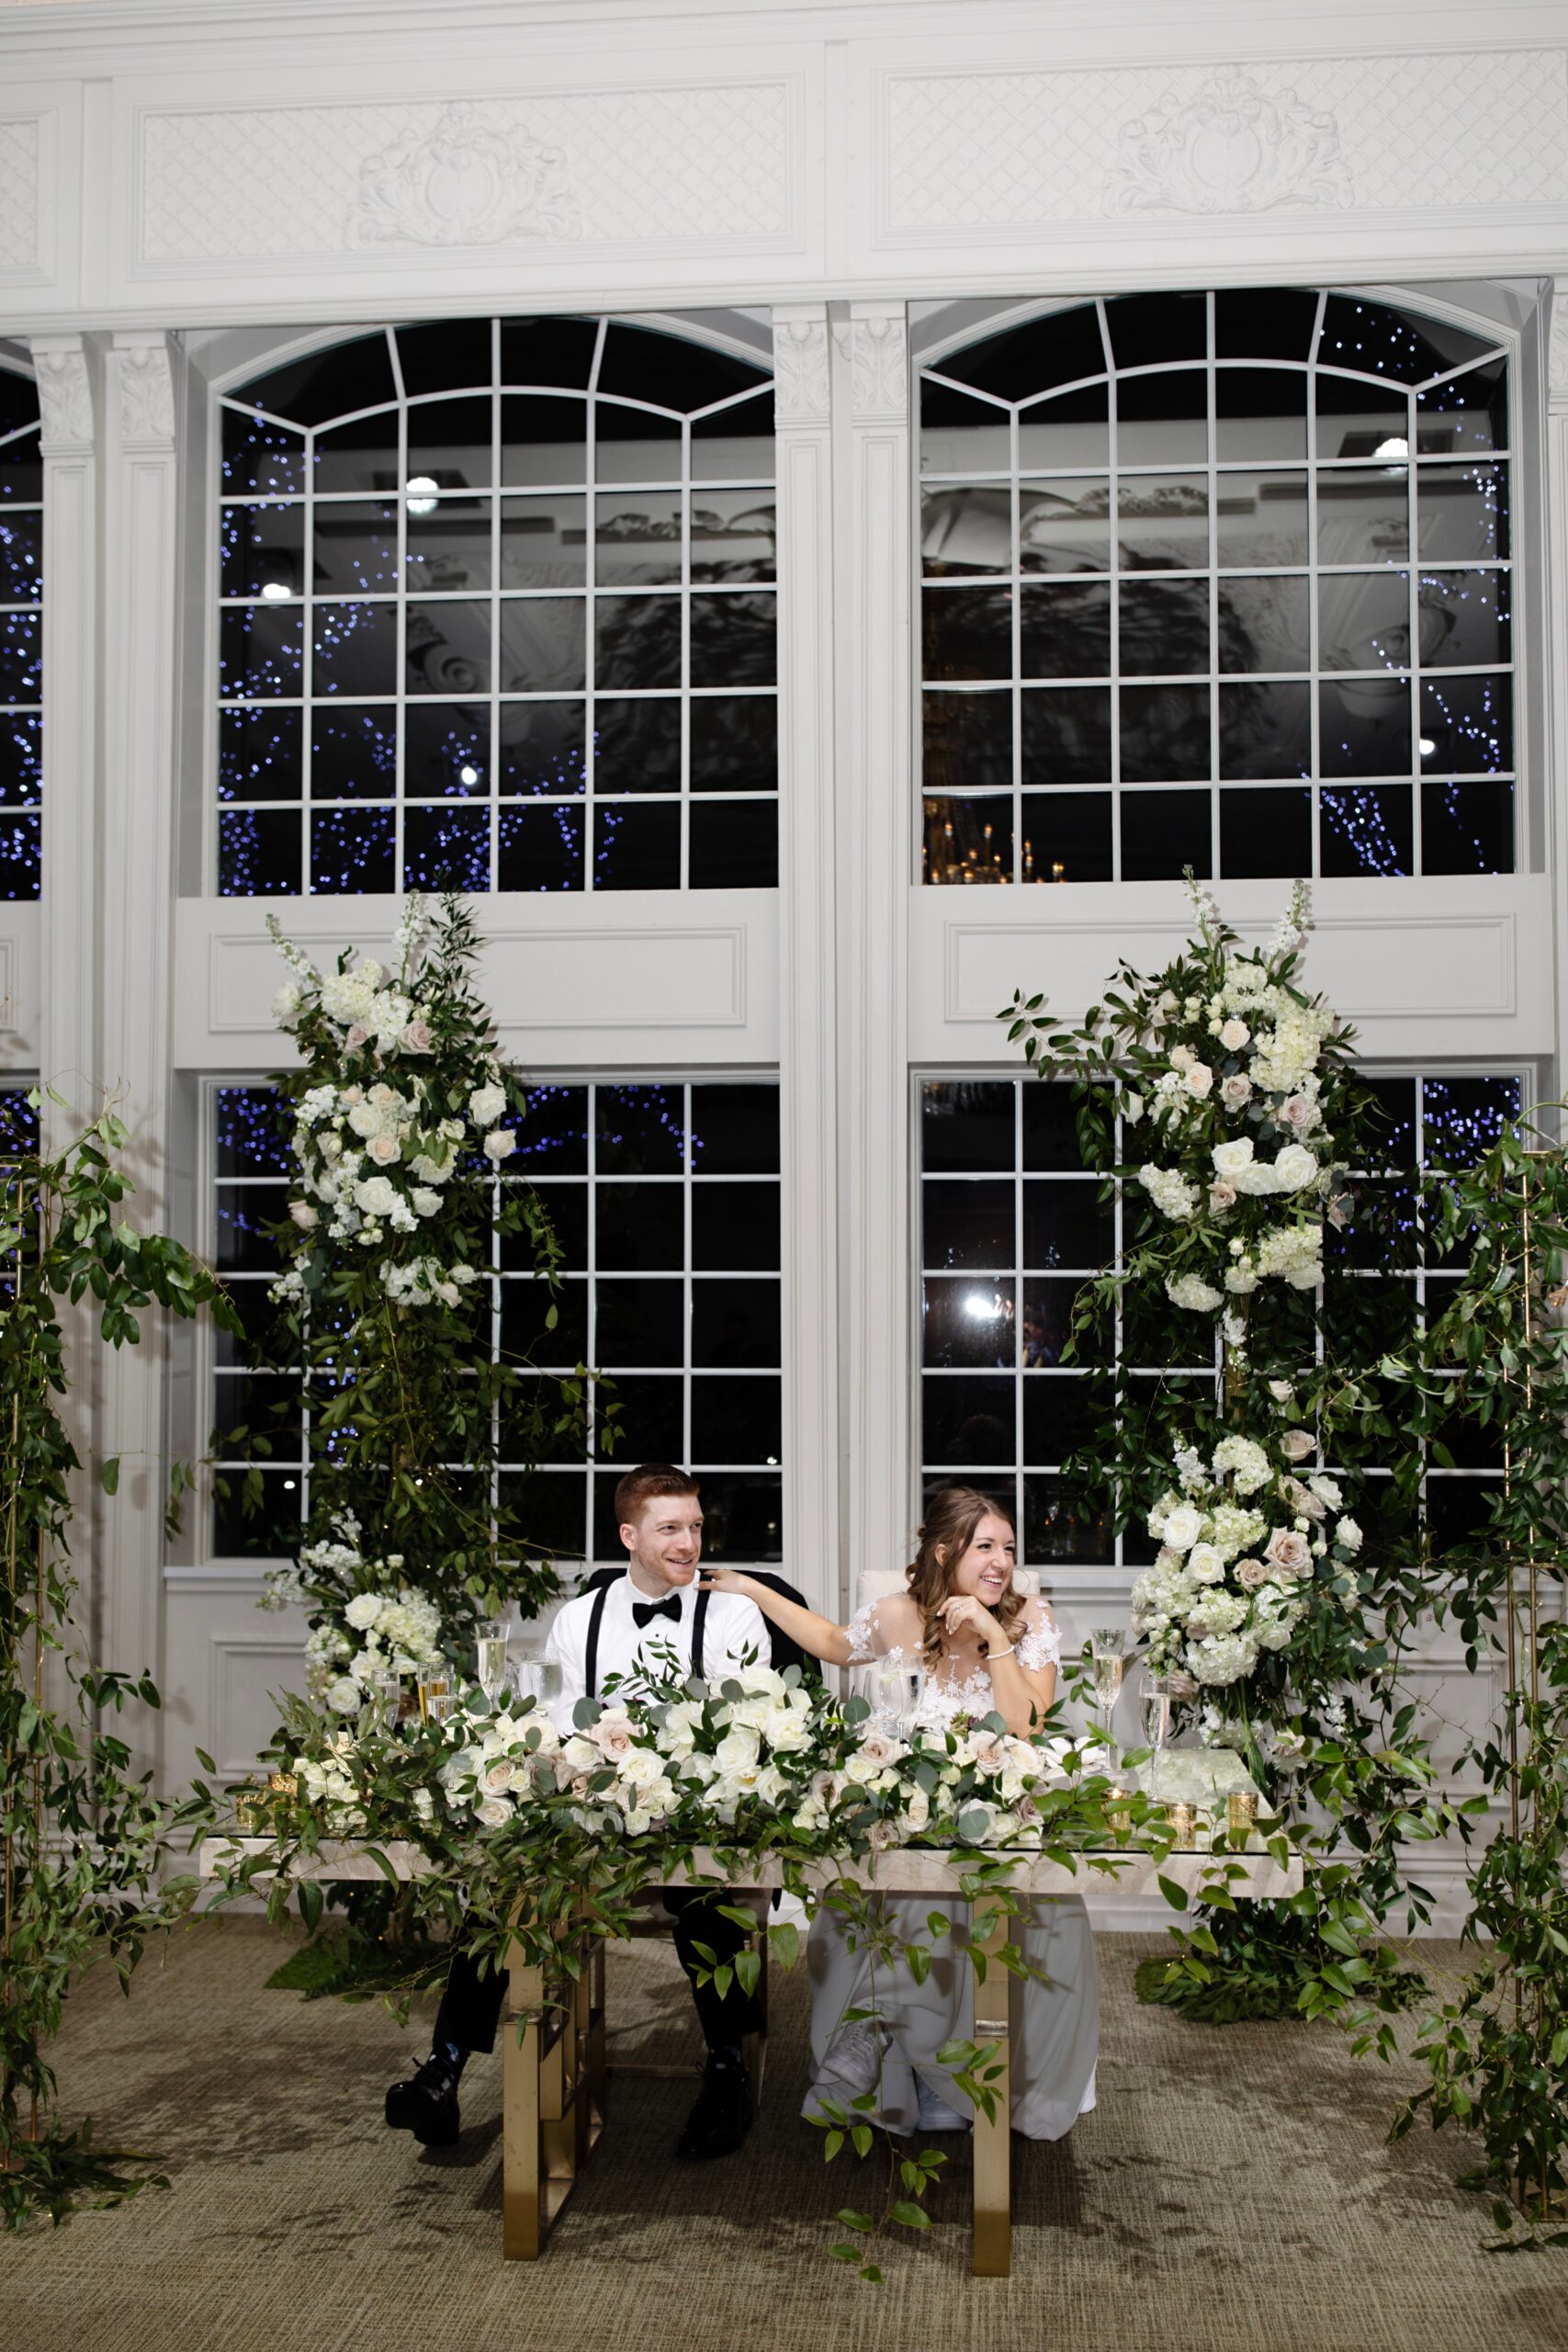 The Estate at Florentine Gardens Wedding, River Vale NJ, New Jersey Wedding Photographer